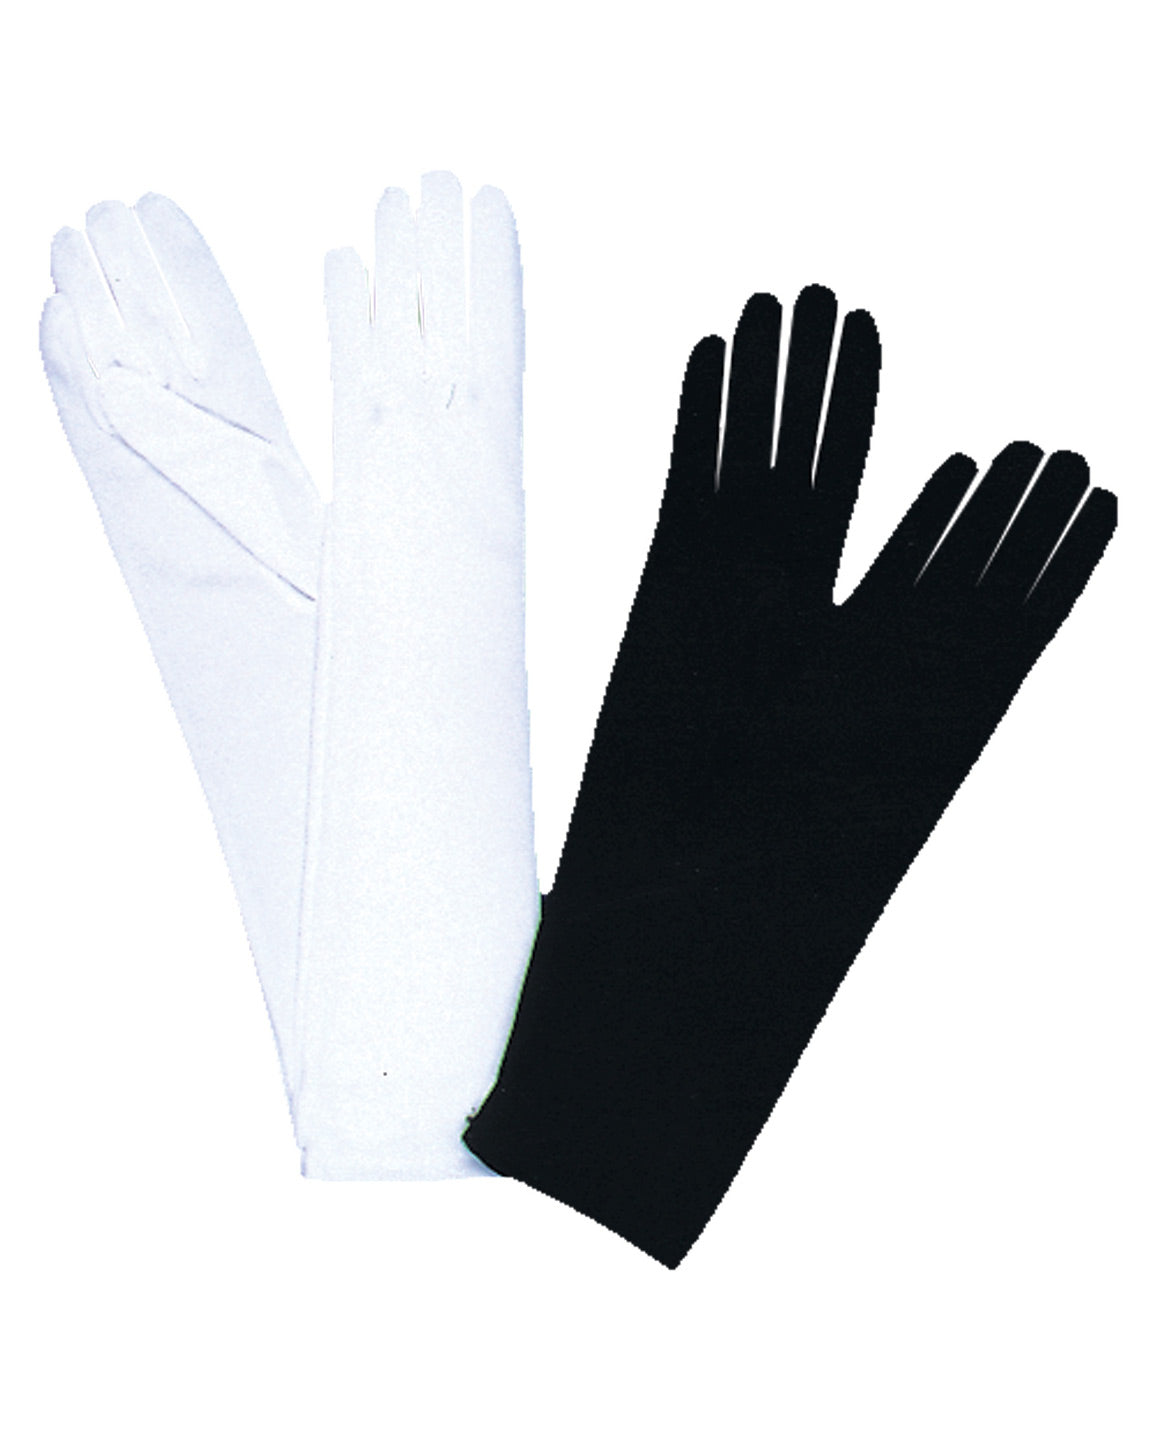 Gloves Elbow Length